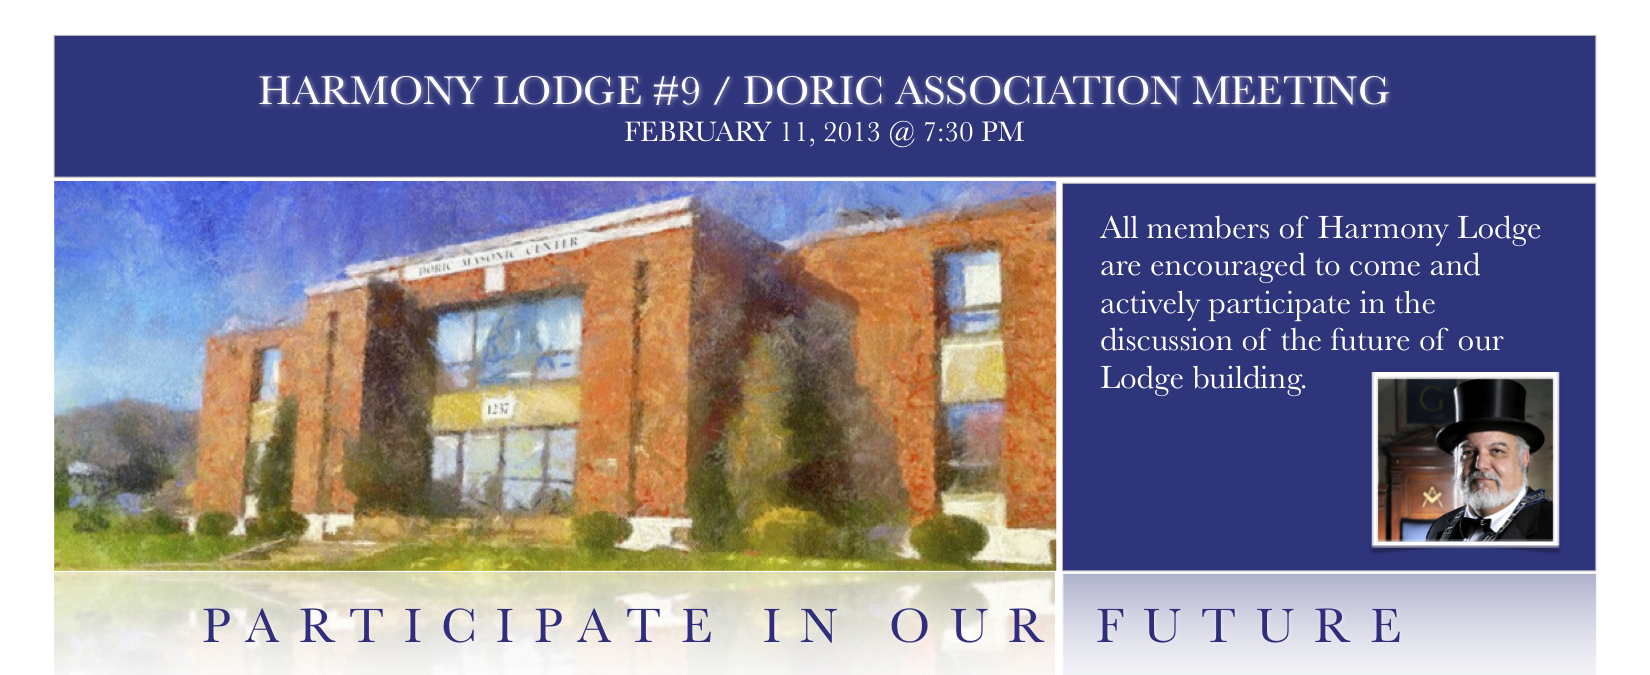 Harmony Lodge #9 / Doric Association Meeting – February 11th @ 7:30